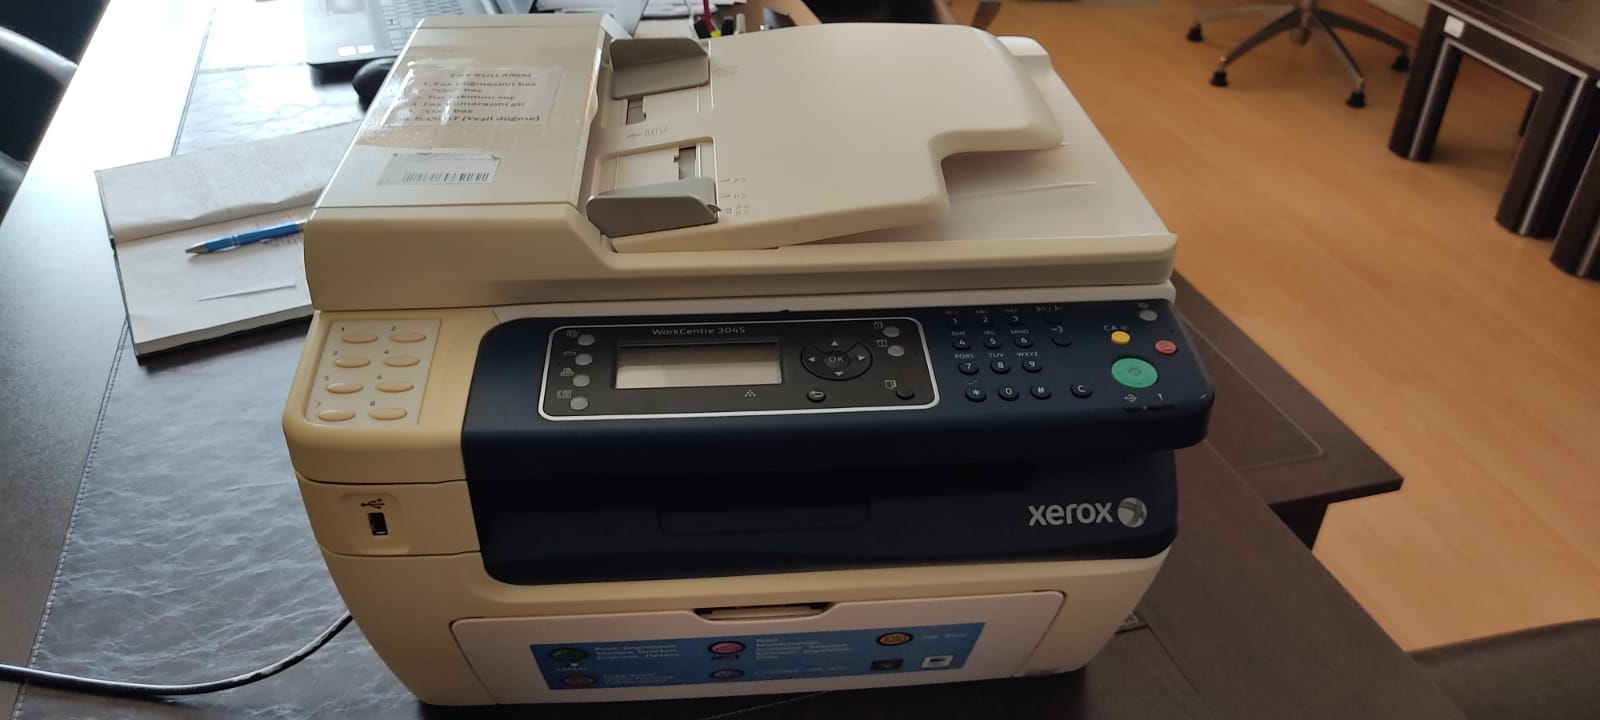 Fax Ve Fotokopi Makinesi